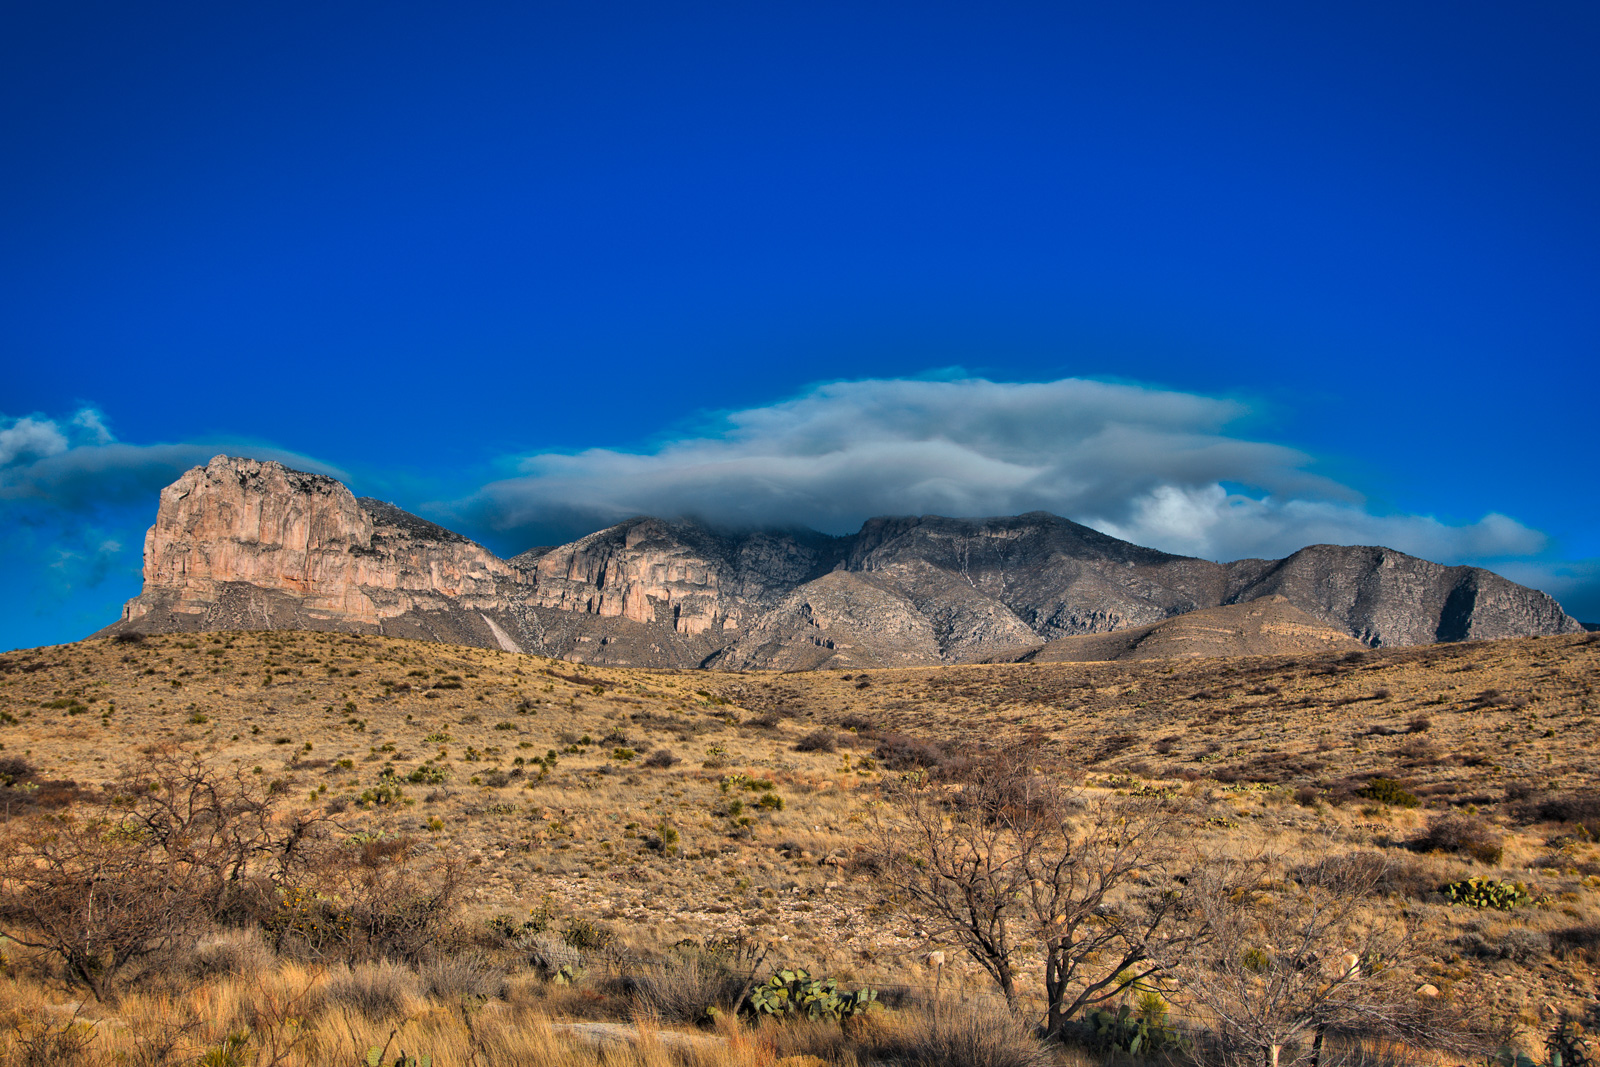 Guadalupe Peak and El Capitan